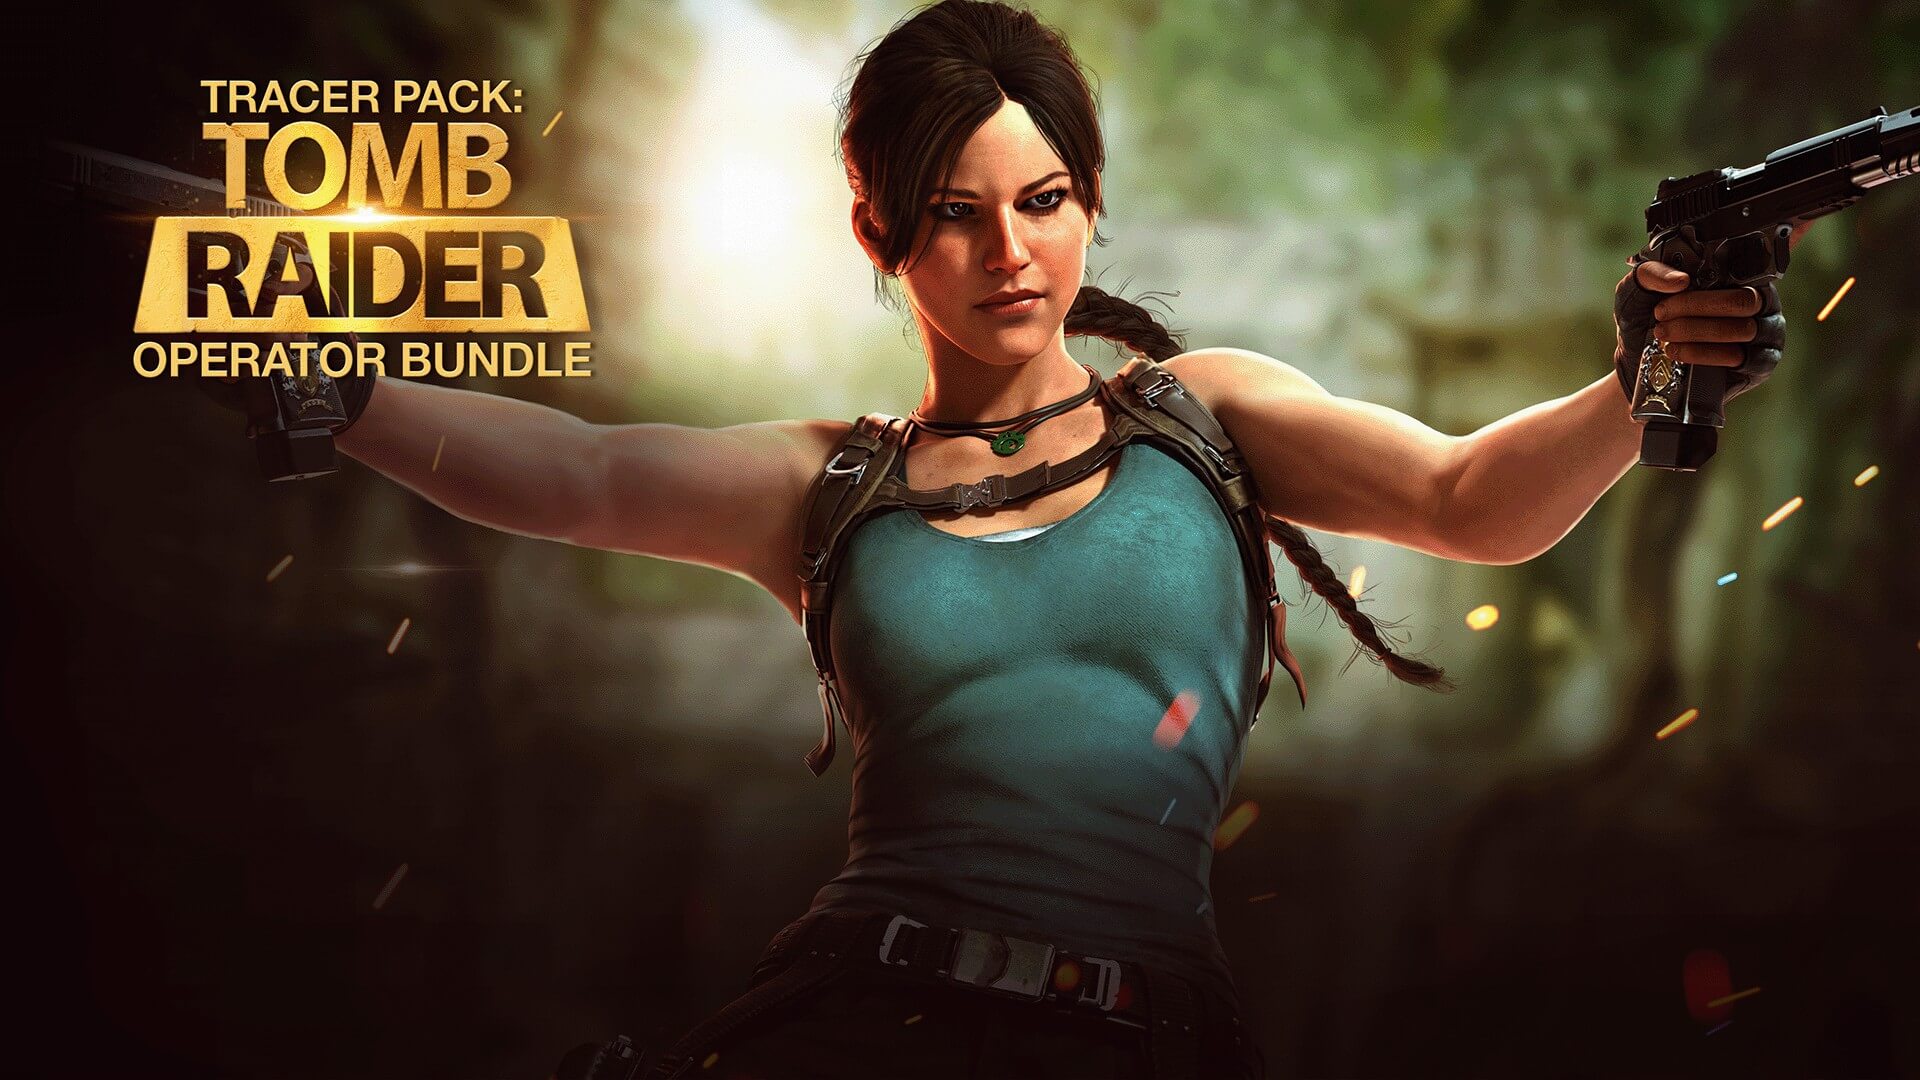 Call of Duty welcomes Lara Croft as new operator